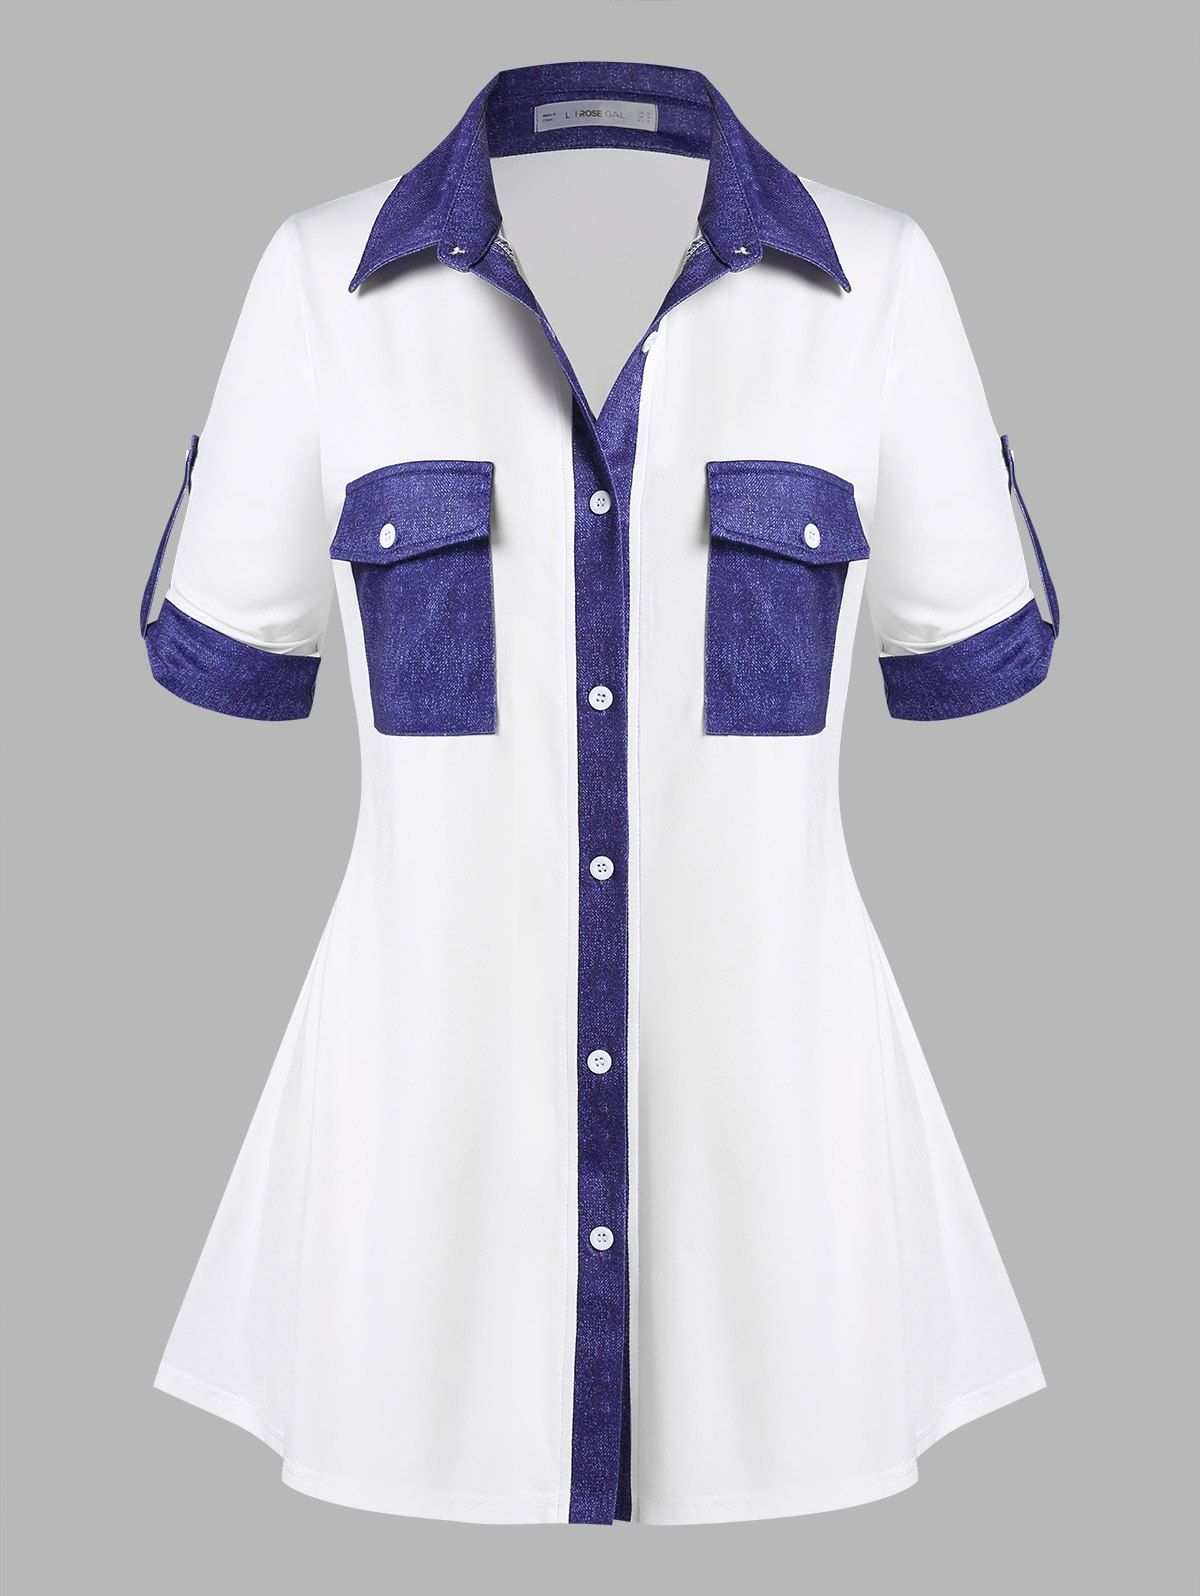 Plus Size Flap Pockets Contrast Color Roll Up Shirt - WHITE L